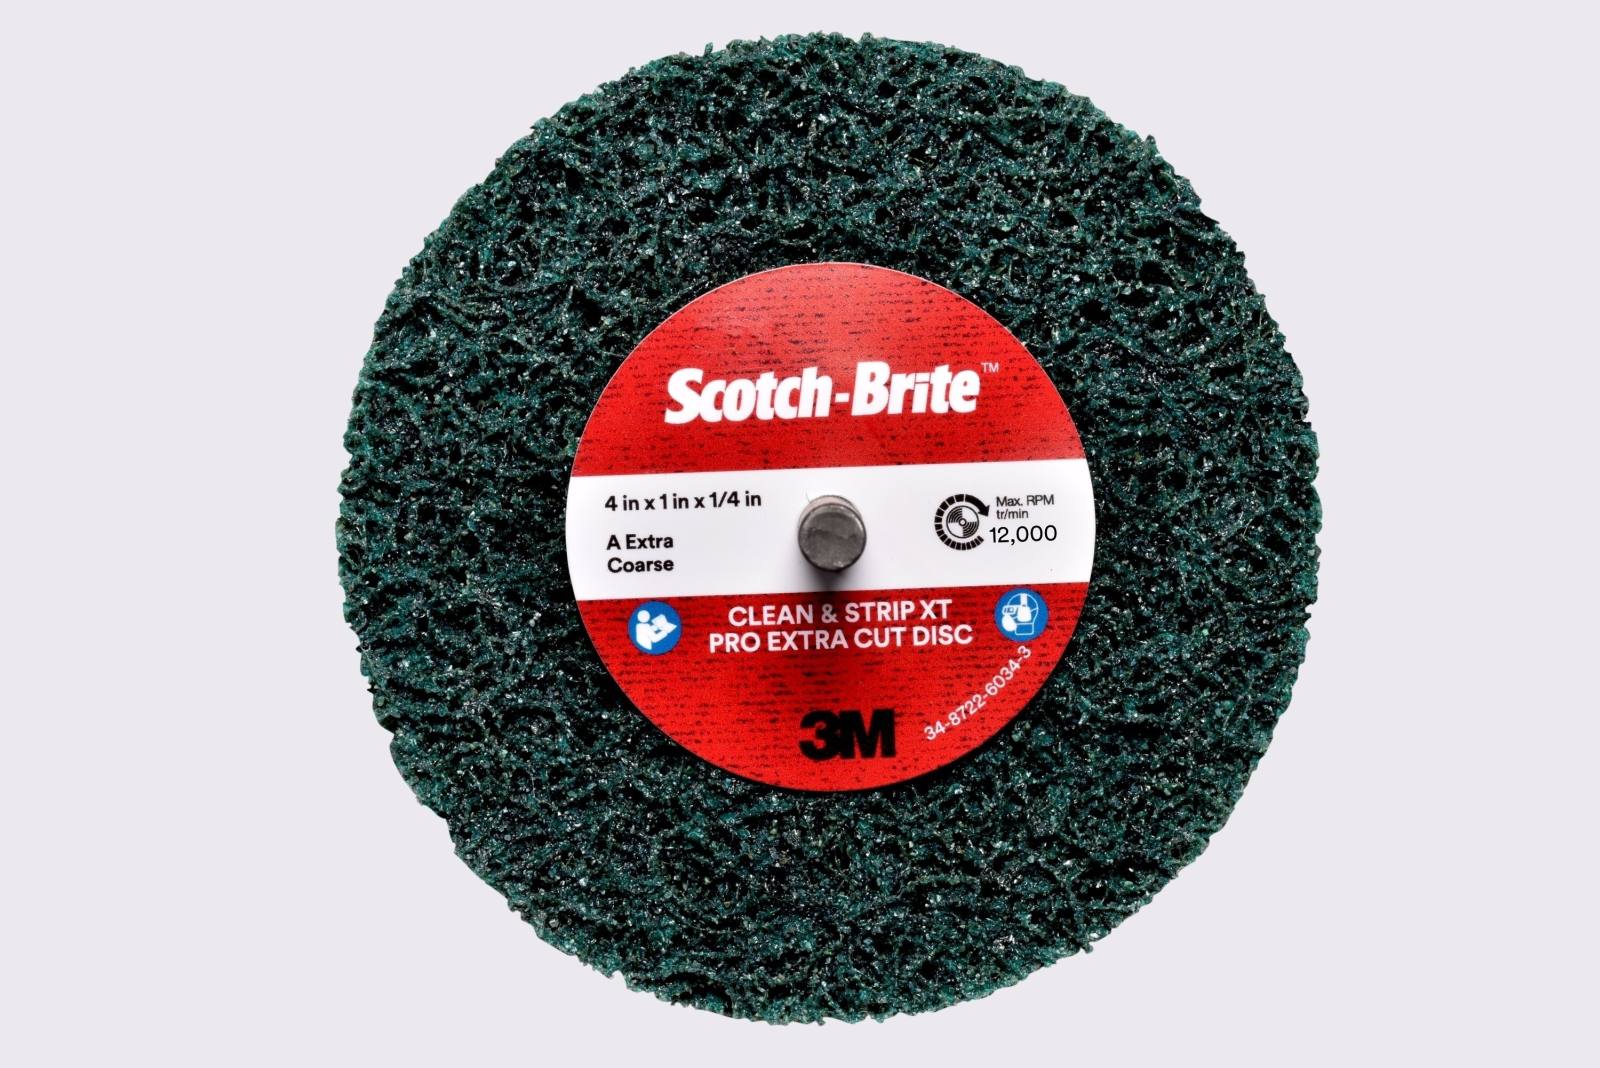 3M Scotch-Brite coarse cleaning disc XT-ZS Pro Extra Cut, 150 mm, 13 mm, 8 mm, A, extra coarse